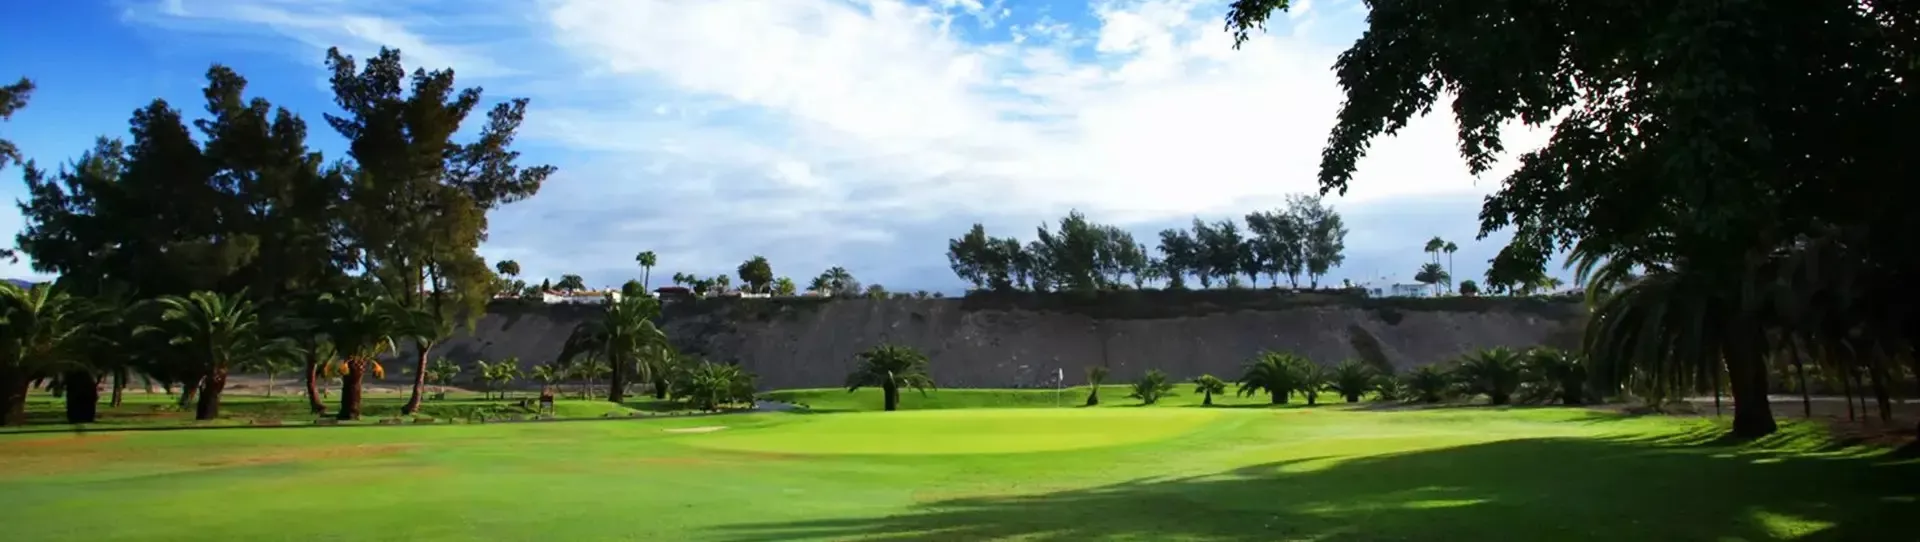 Spain golf courses - Maspalomas Golf Course - Photo 3